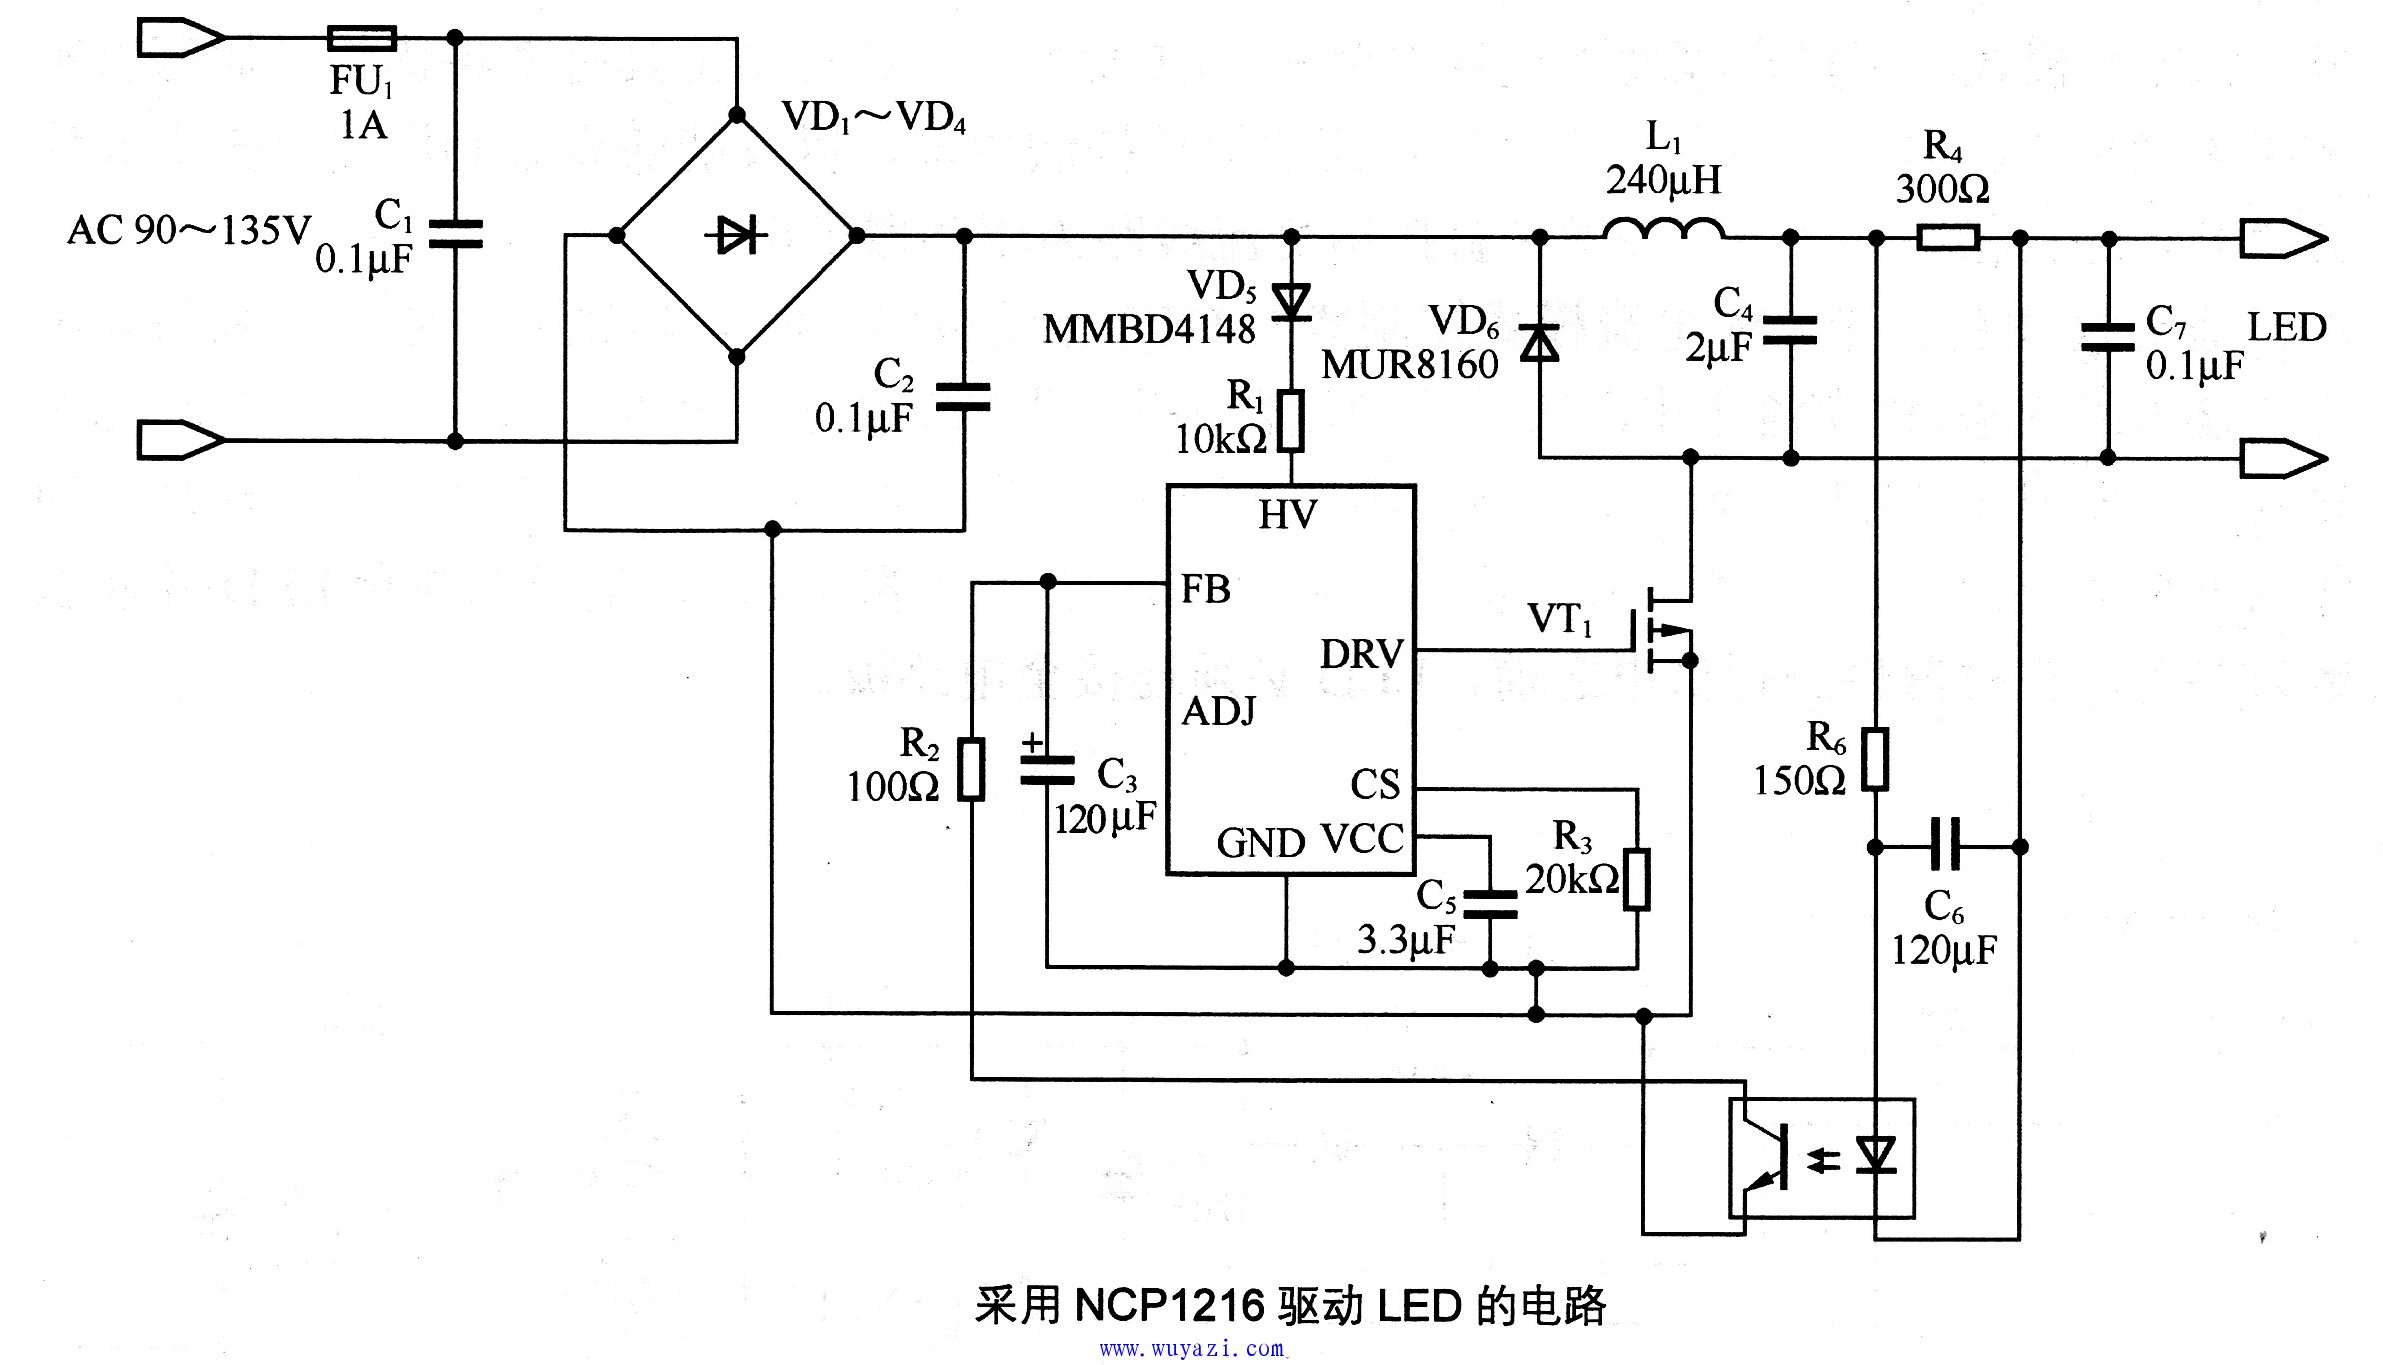 採用NCP1216驅動LED的電路